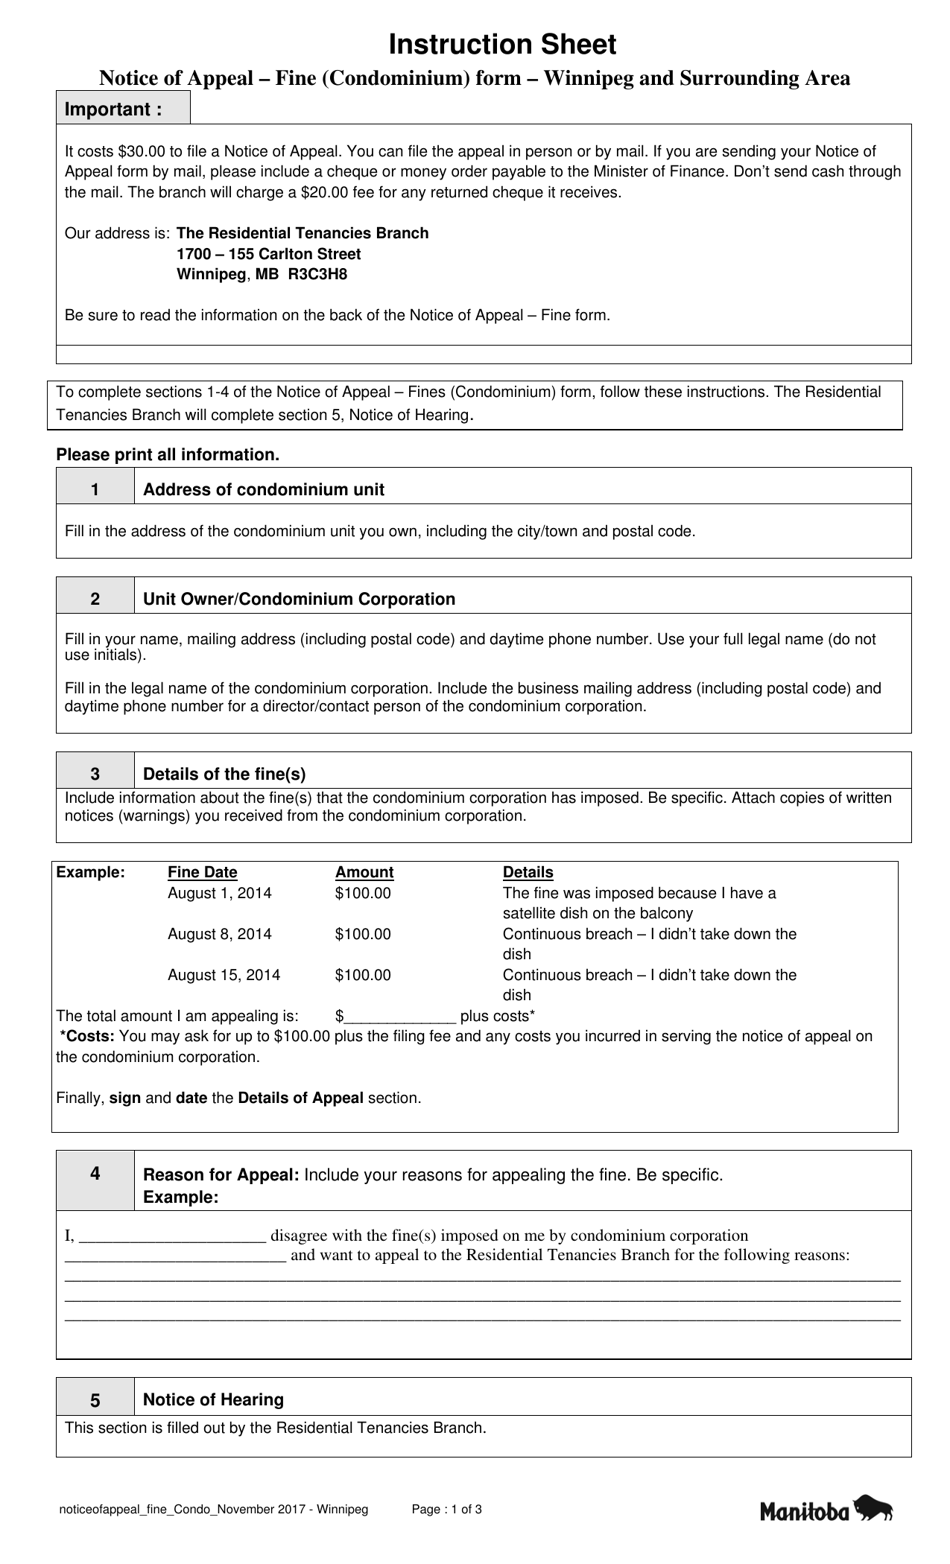 Notice of Appeal - Fine (Condominium) Form - Winnipeg and Surrounding Area - Manitoba, Canada, Page 1